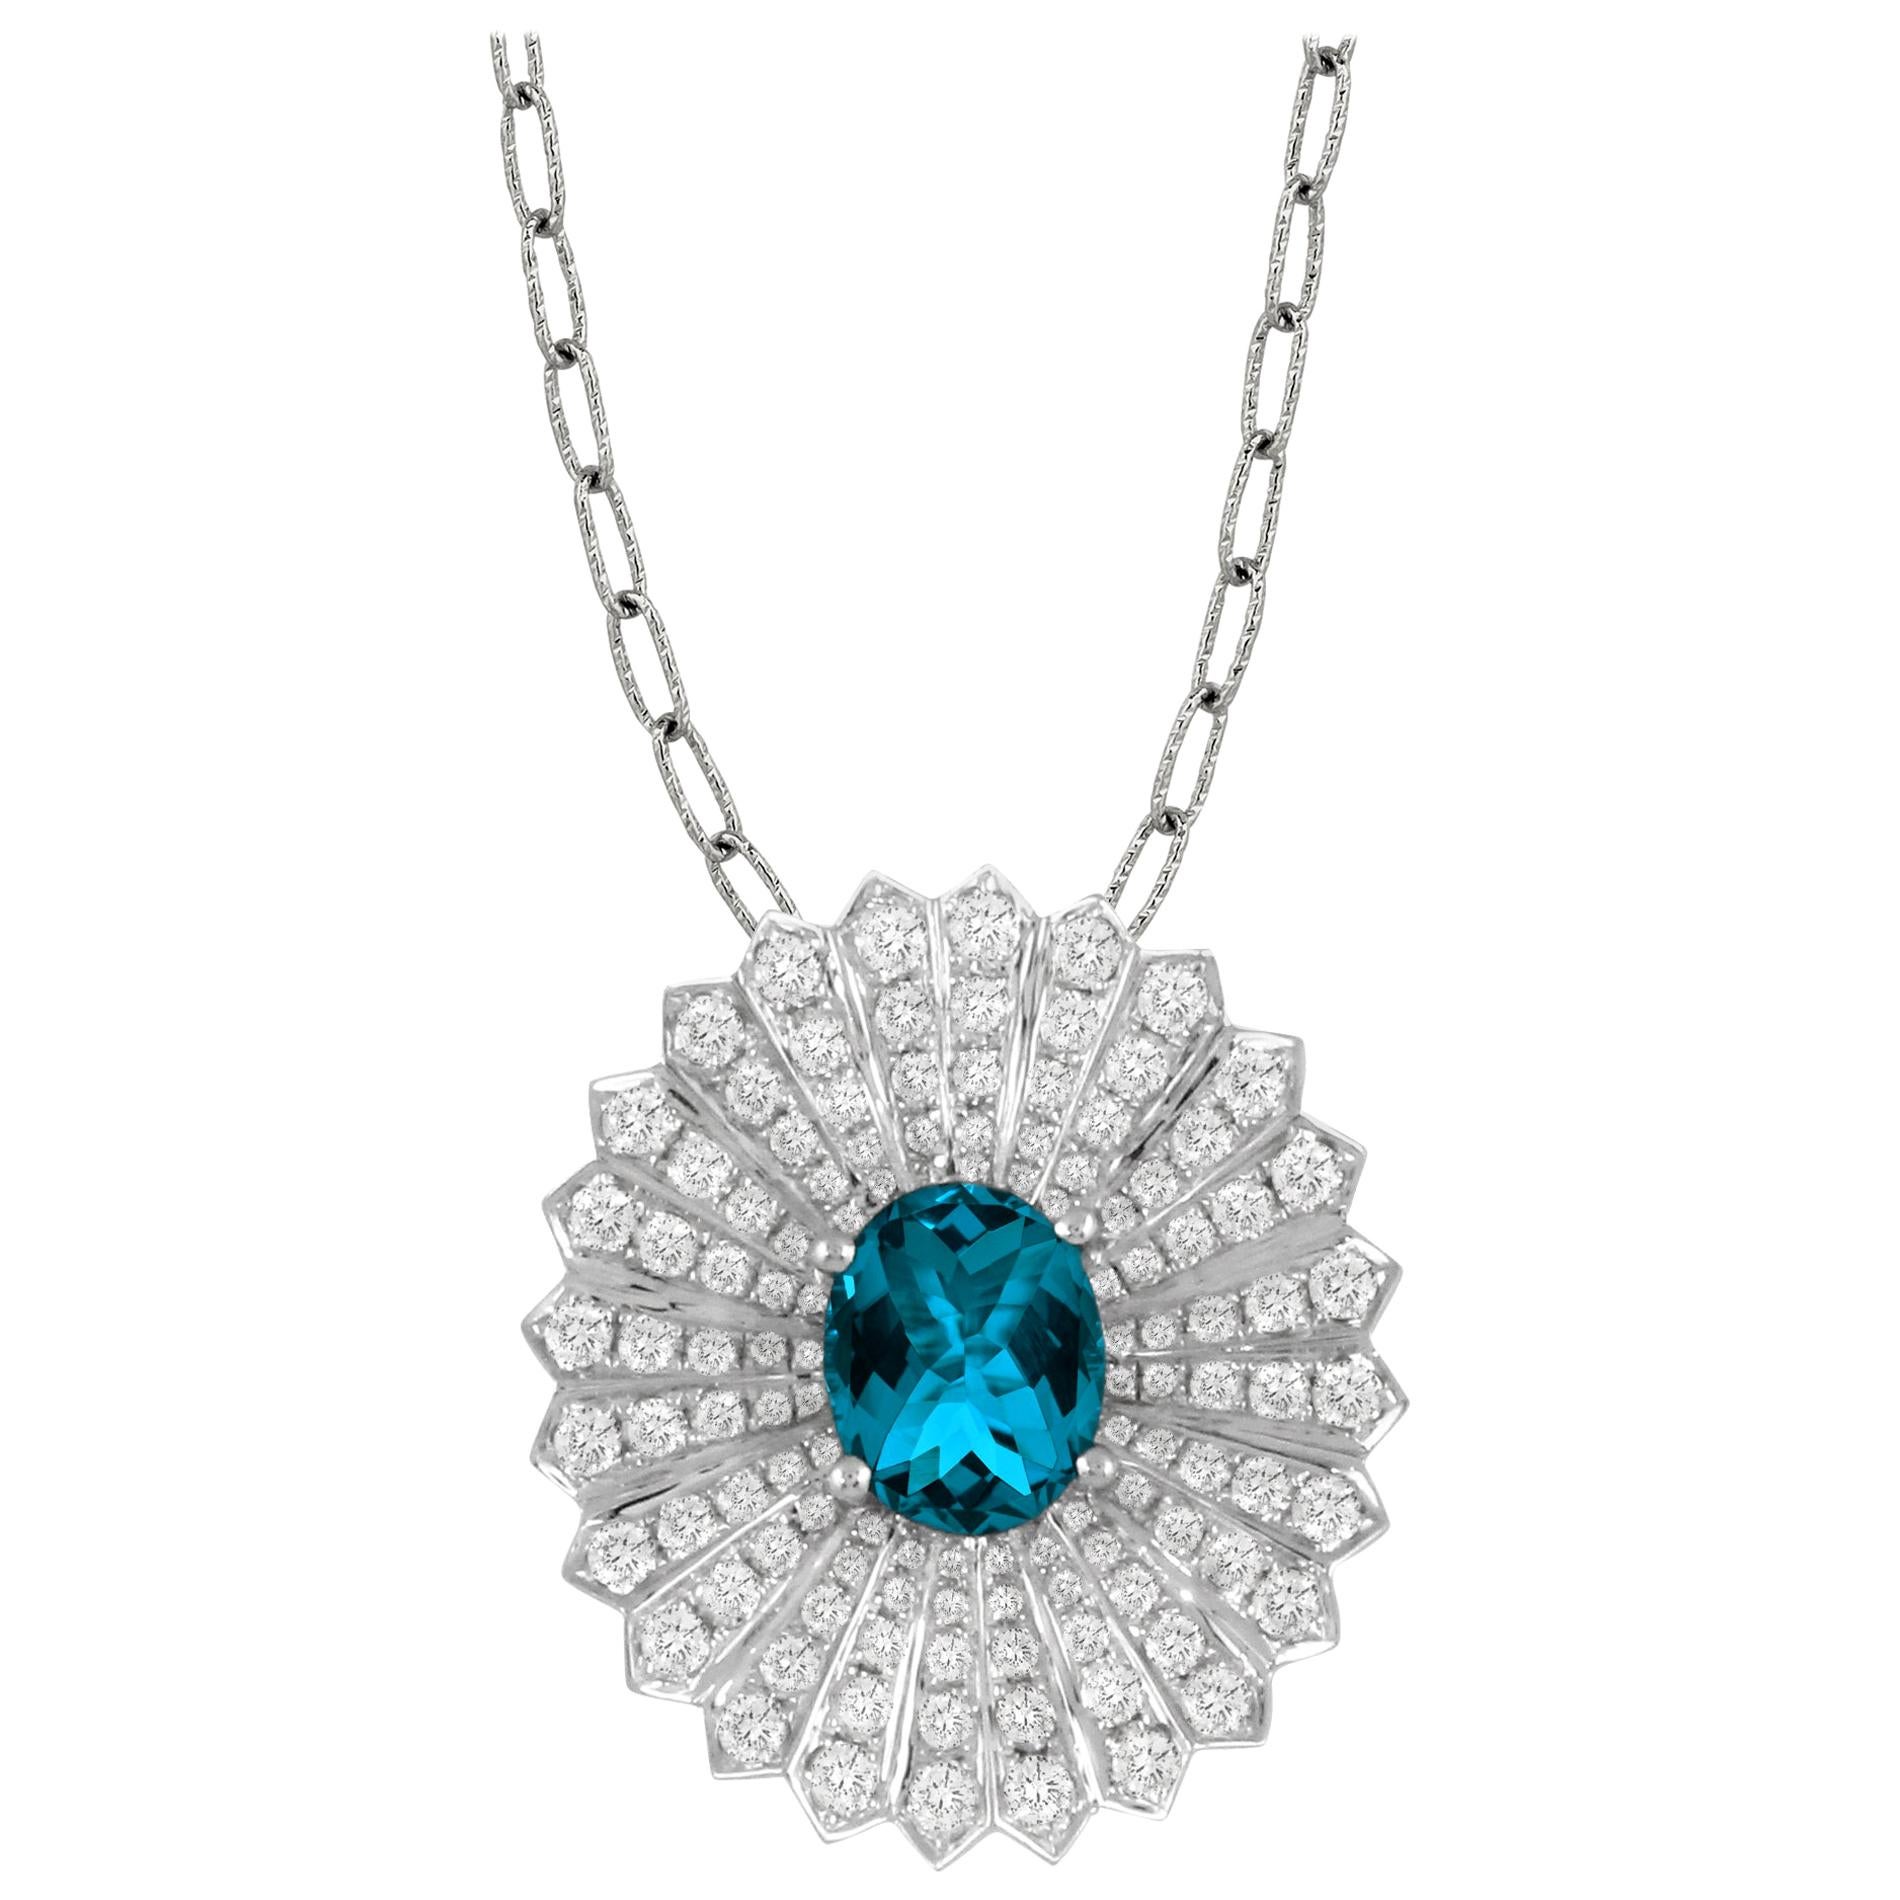 18 Karat Gold Oval Pendant Fashion Necklace with London Blue Topaz and Diamonds